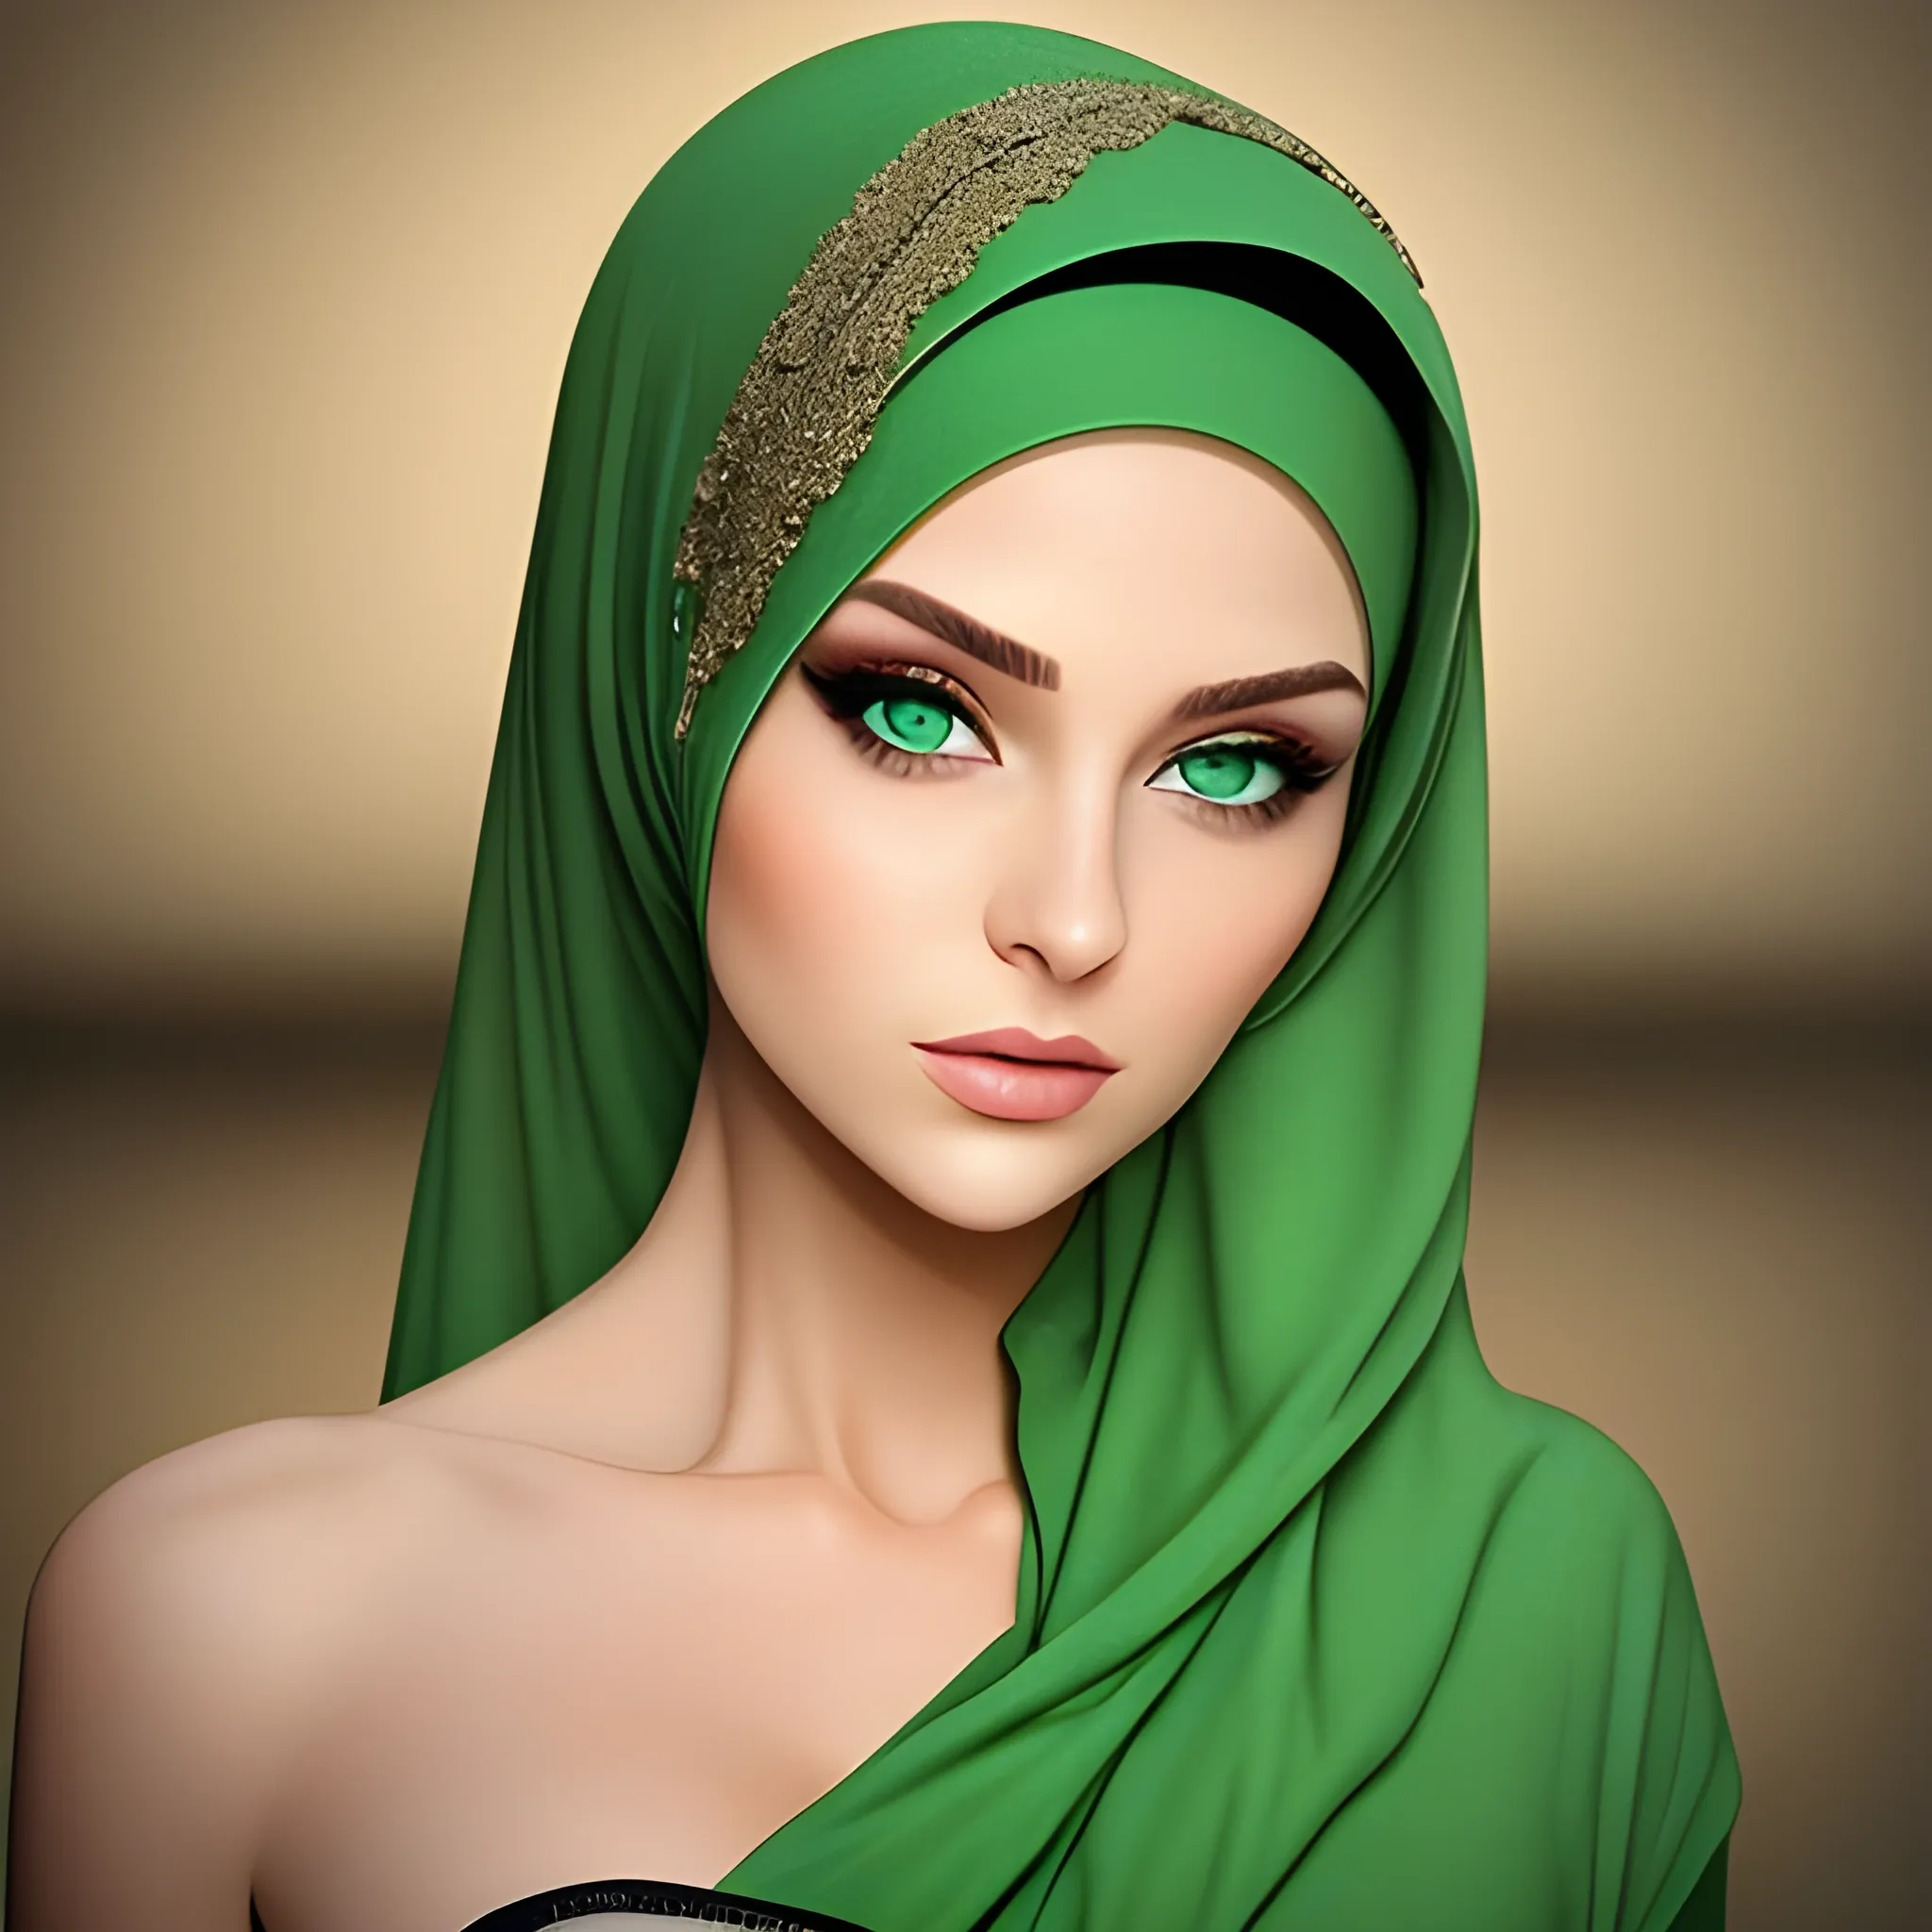 fit hot hijab babe beautiful green eyes elegant pose masterpiece art 